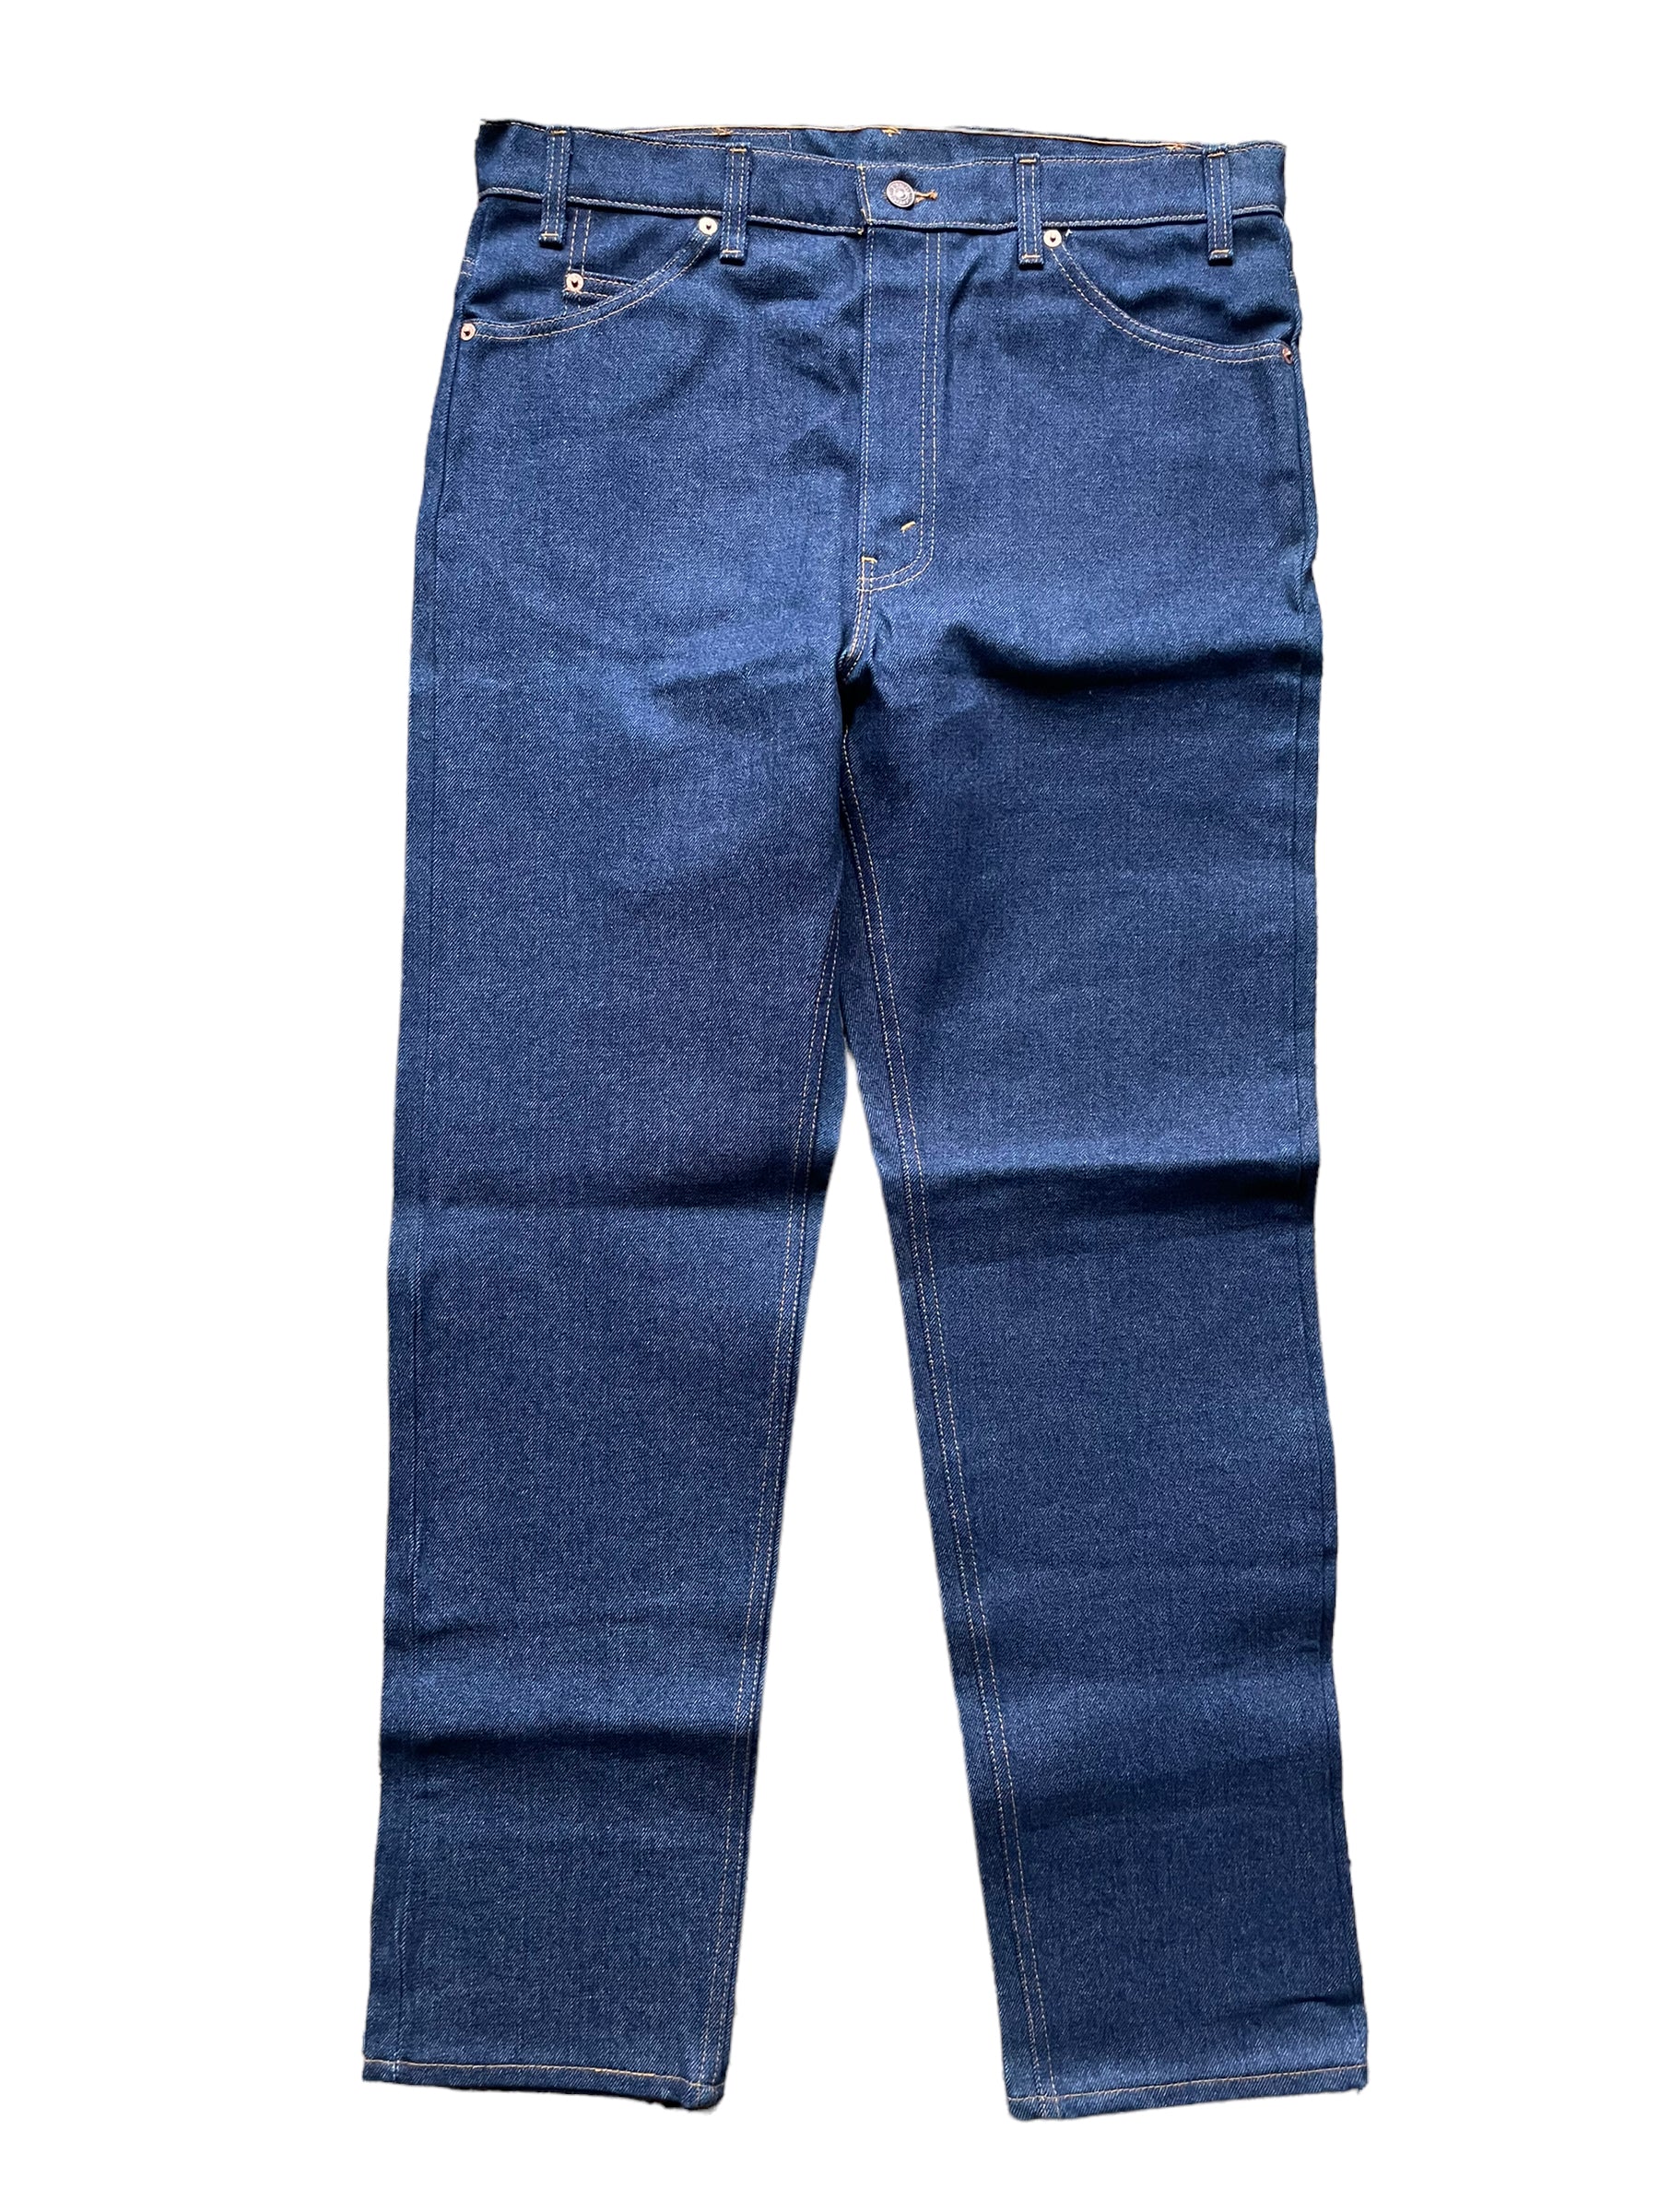 Full fornt view of Vintage Deadstock 80s Levi's 505 Jeans | Seattle Vintage Levi's | Barn Owl True Vintage